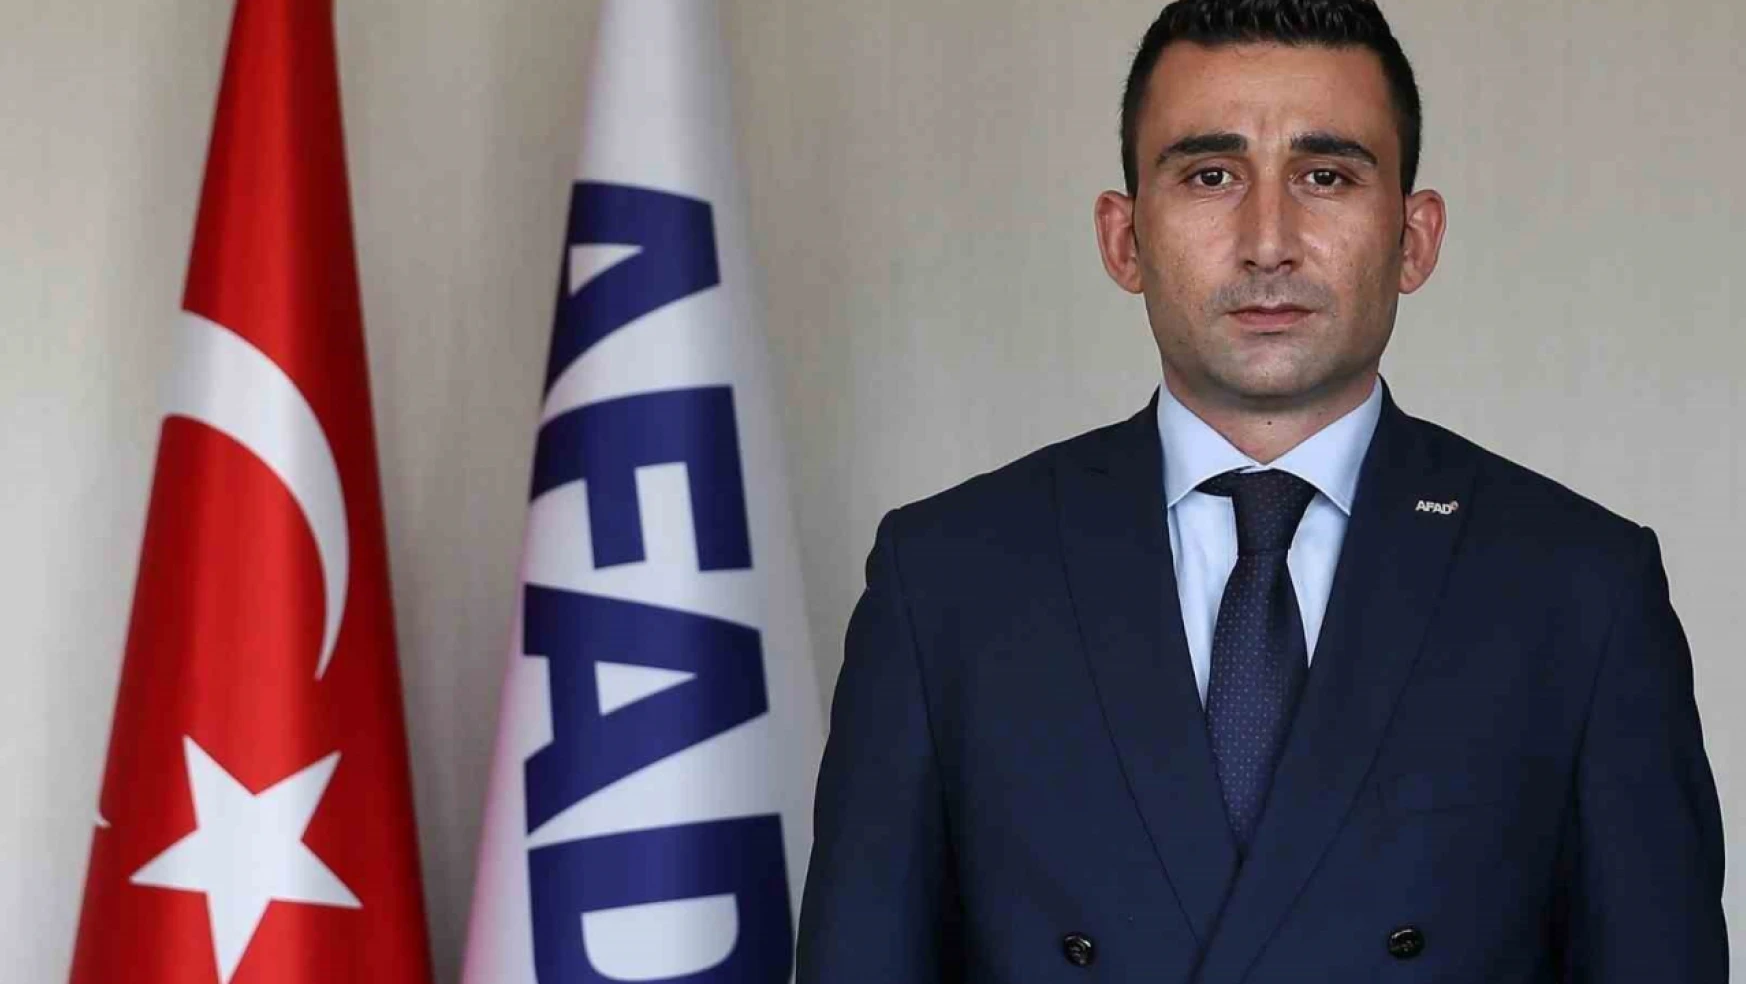 Bolu AFAD İl Müdürü Erzincan'a atandı